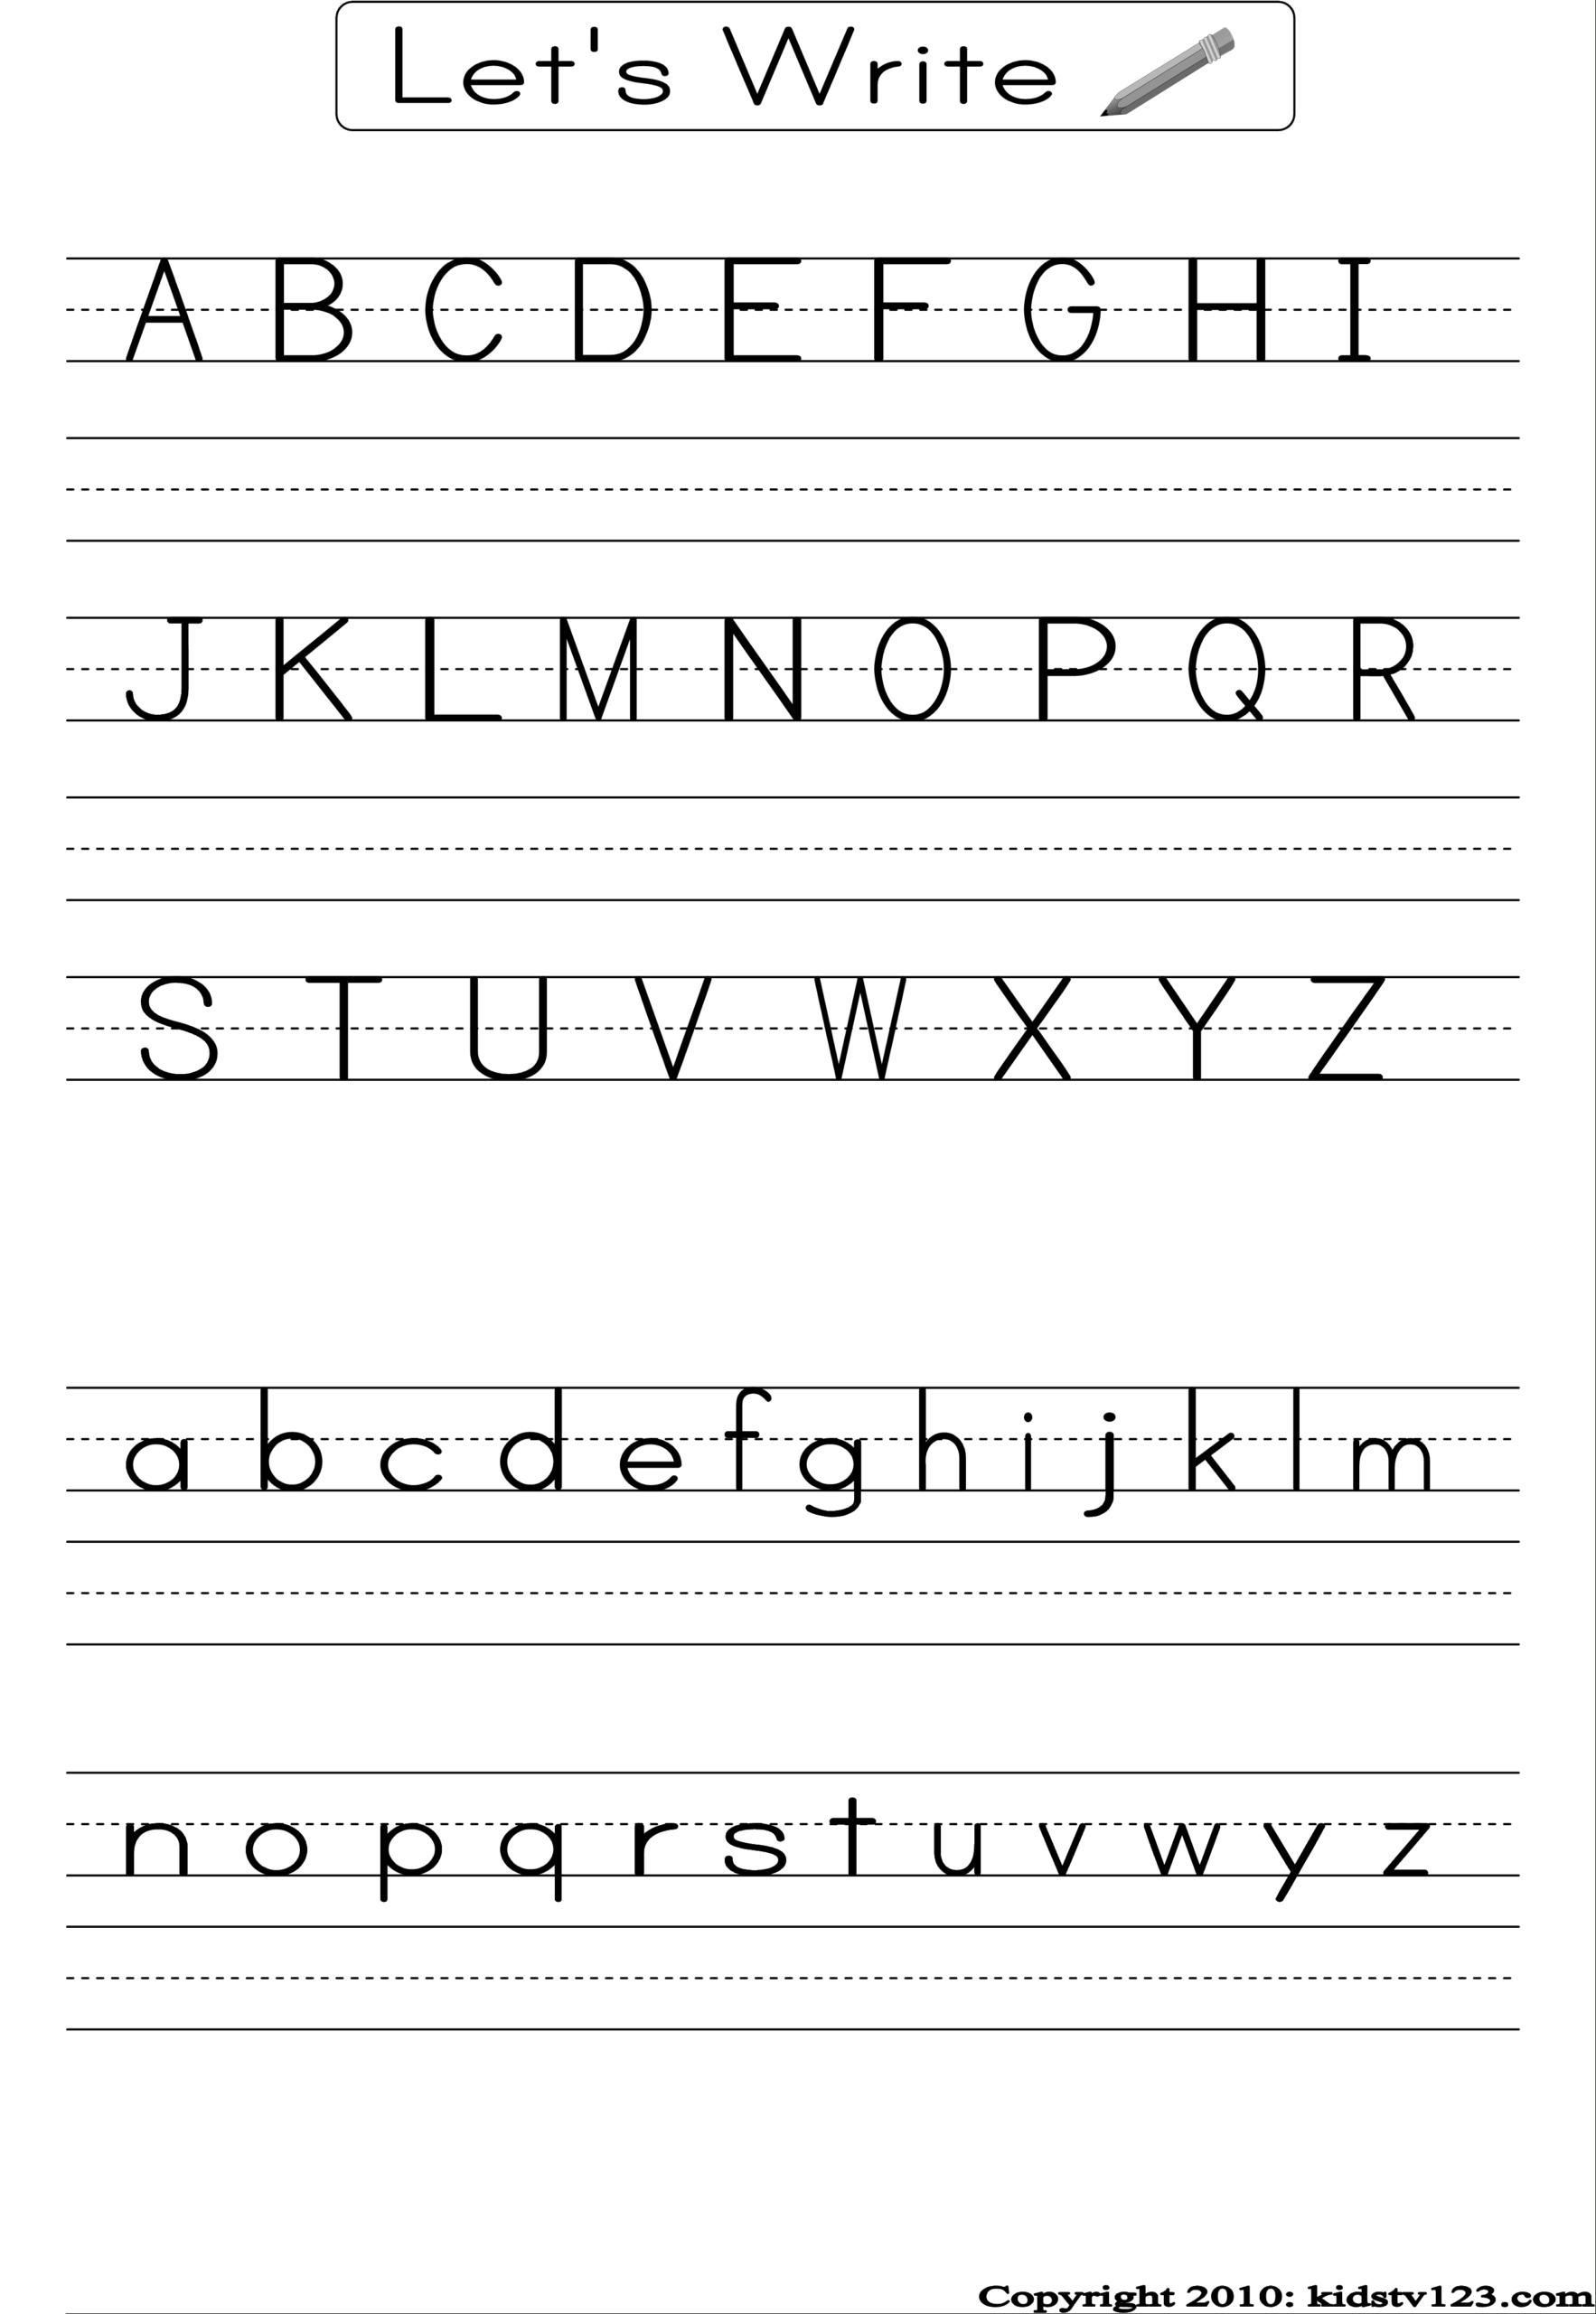 Alphabet Writing Practice Sheet | Alphabet Writing Practice intended for Alphabet Worksheets Writing